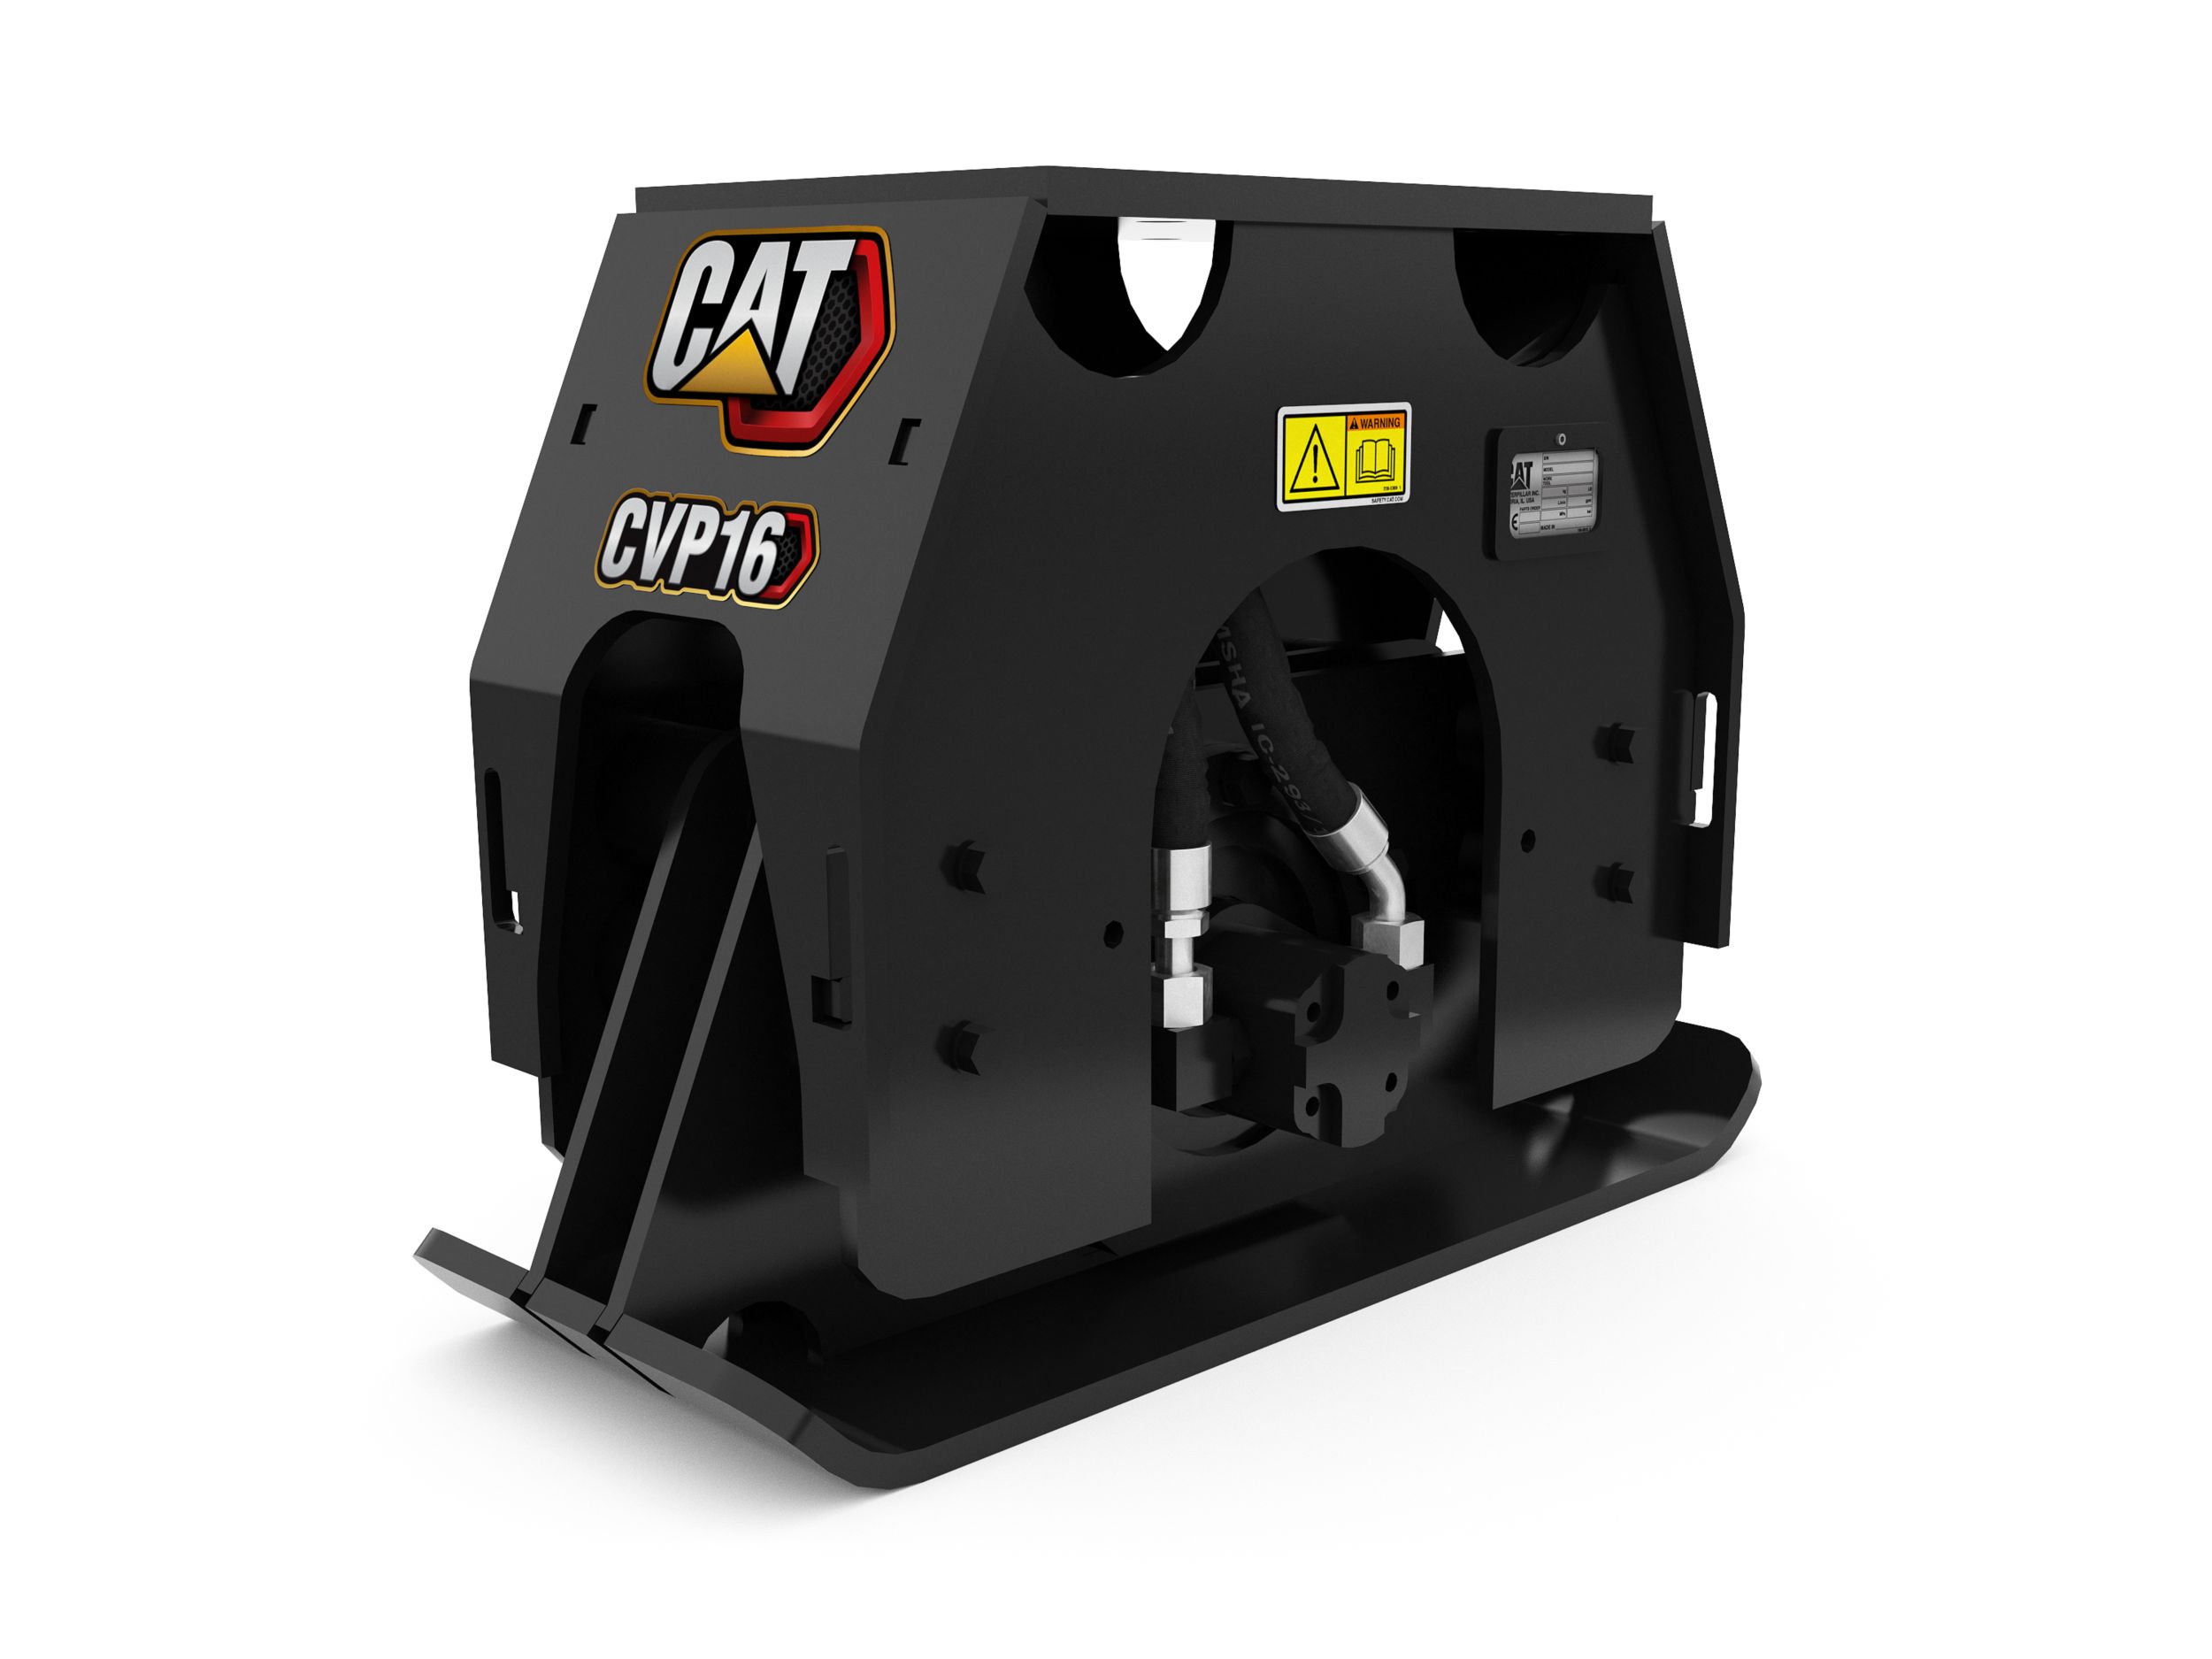 CVP16 Vibratory Plate Compactor